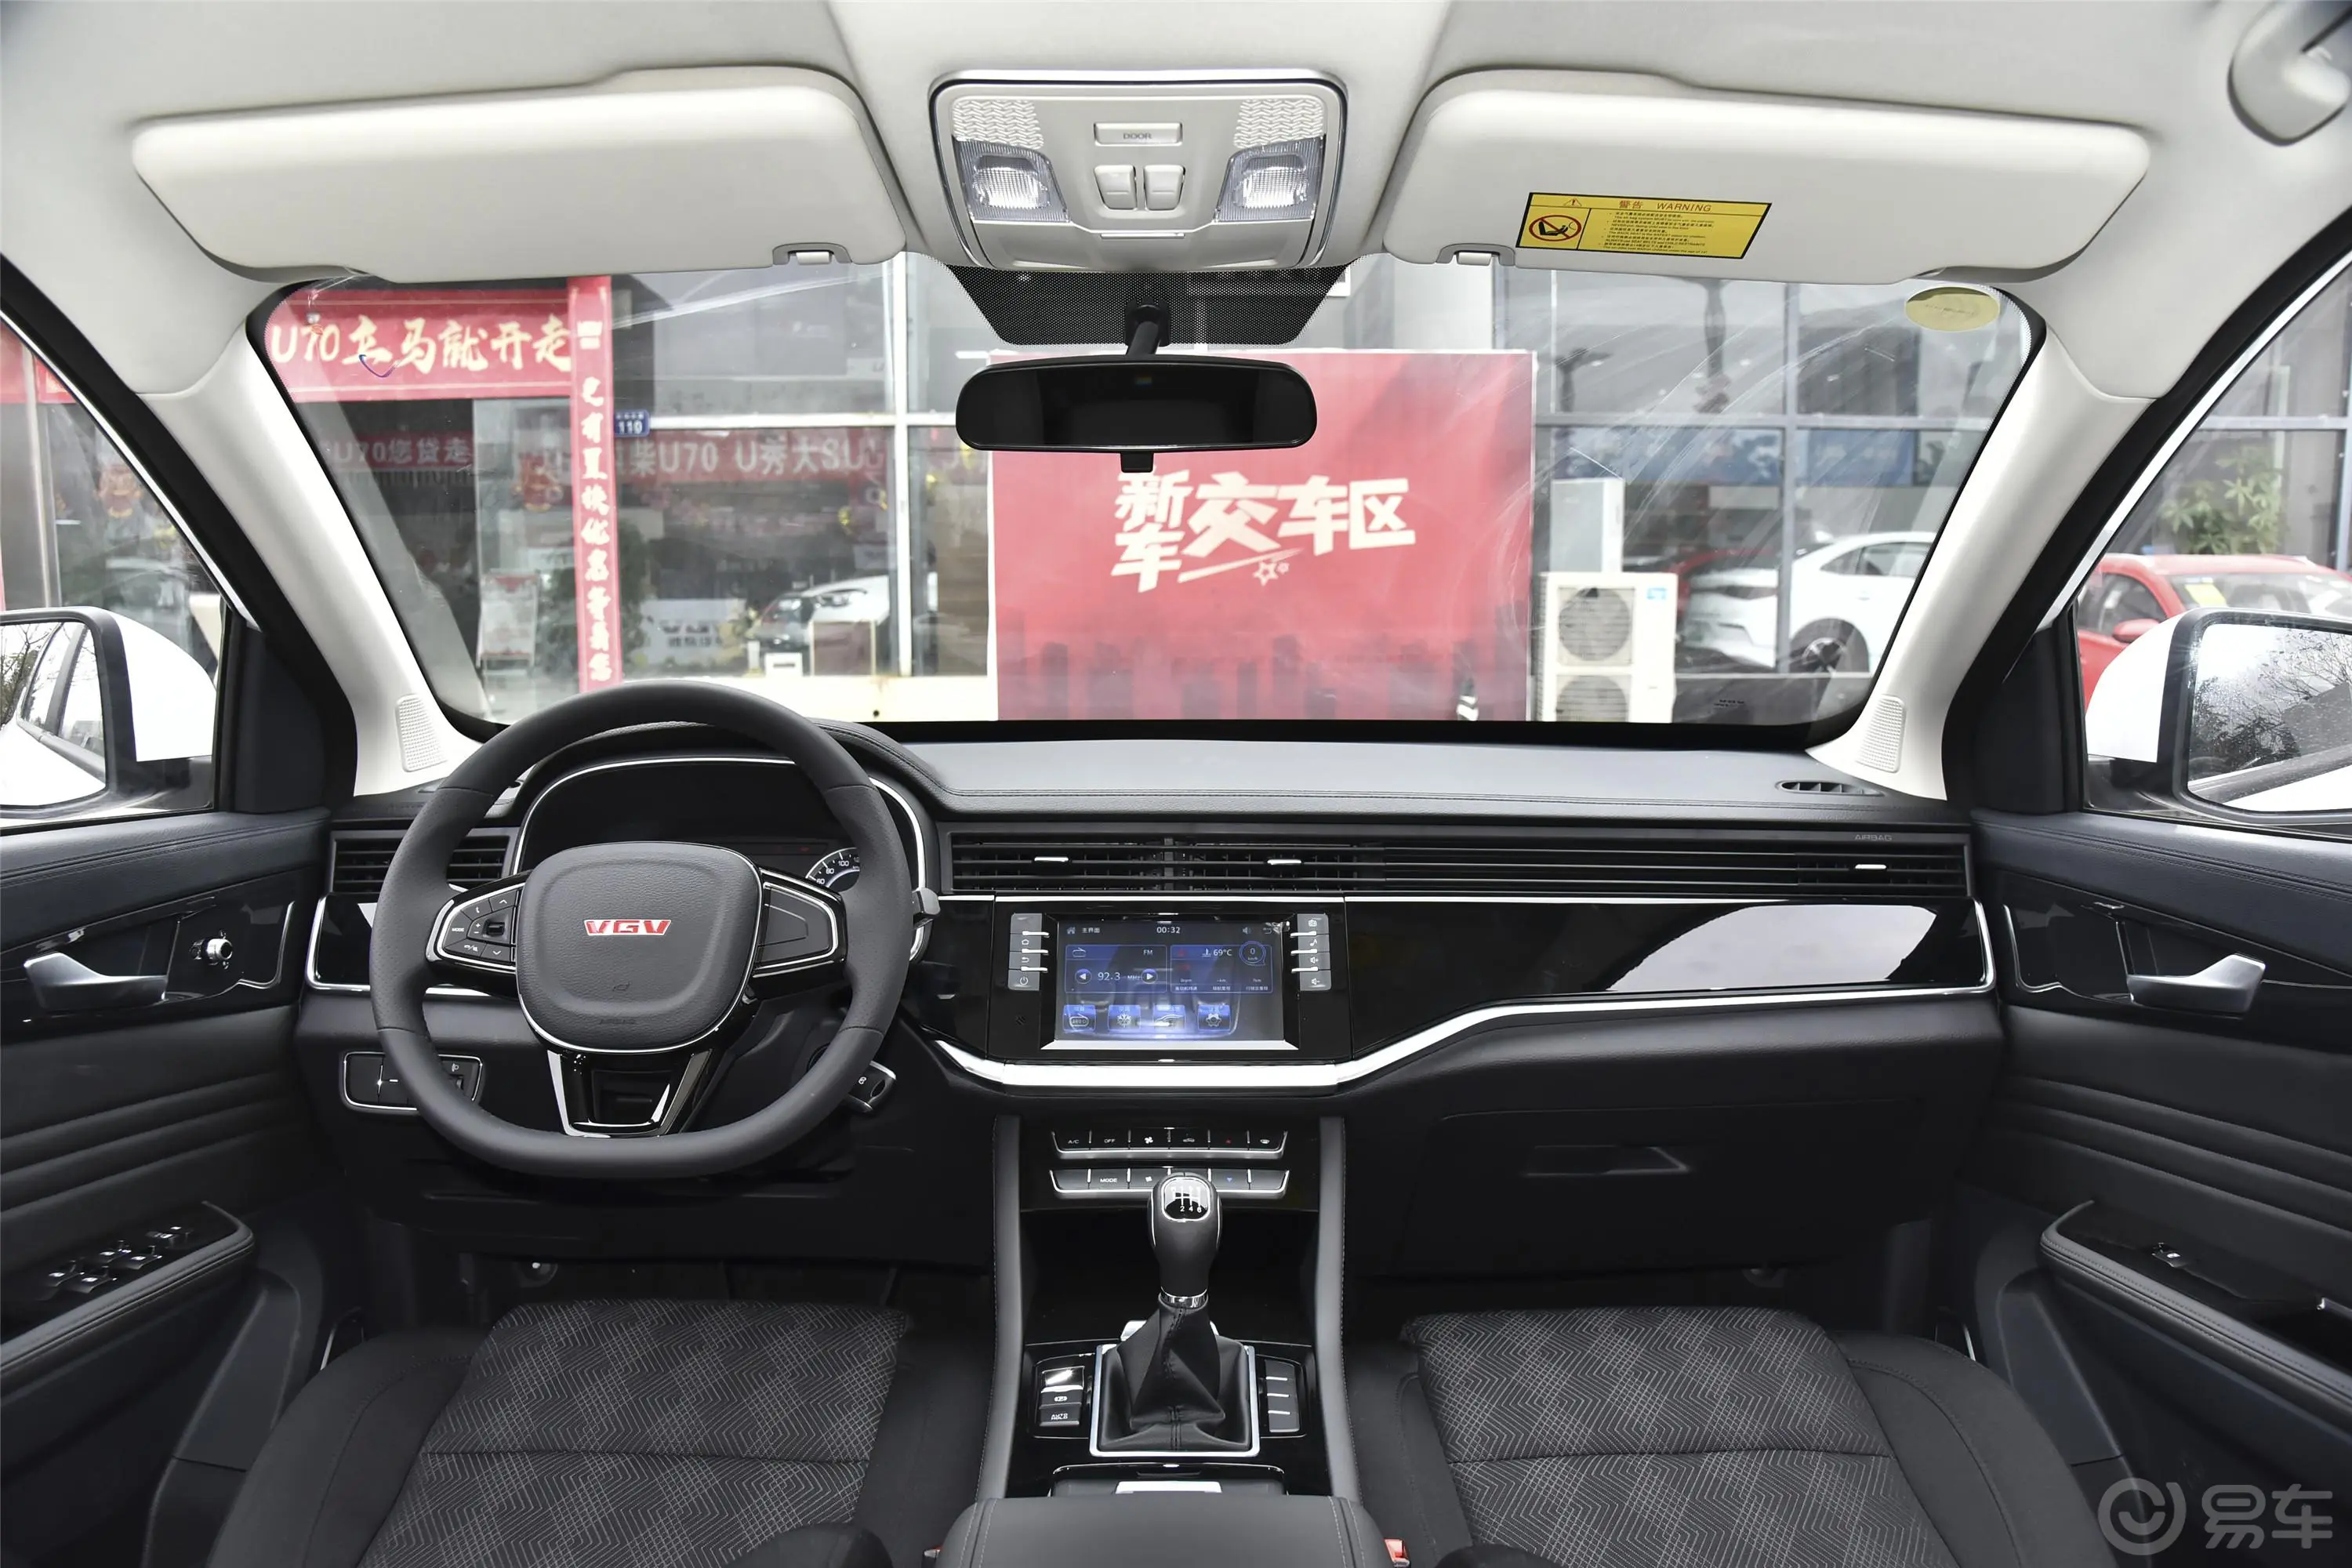 VGV U701.5T 手动 舒适版车窗调节整体